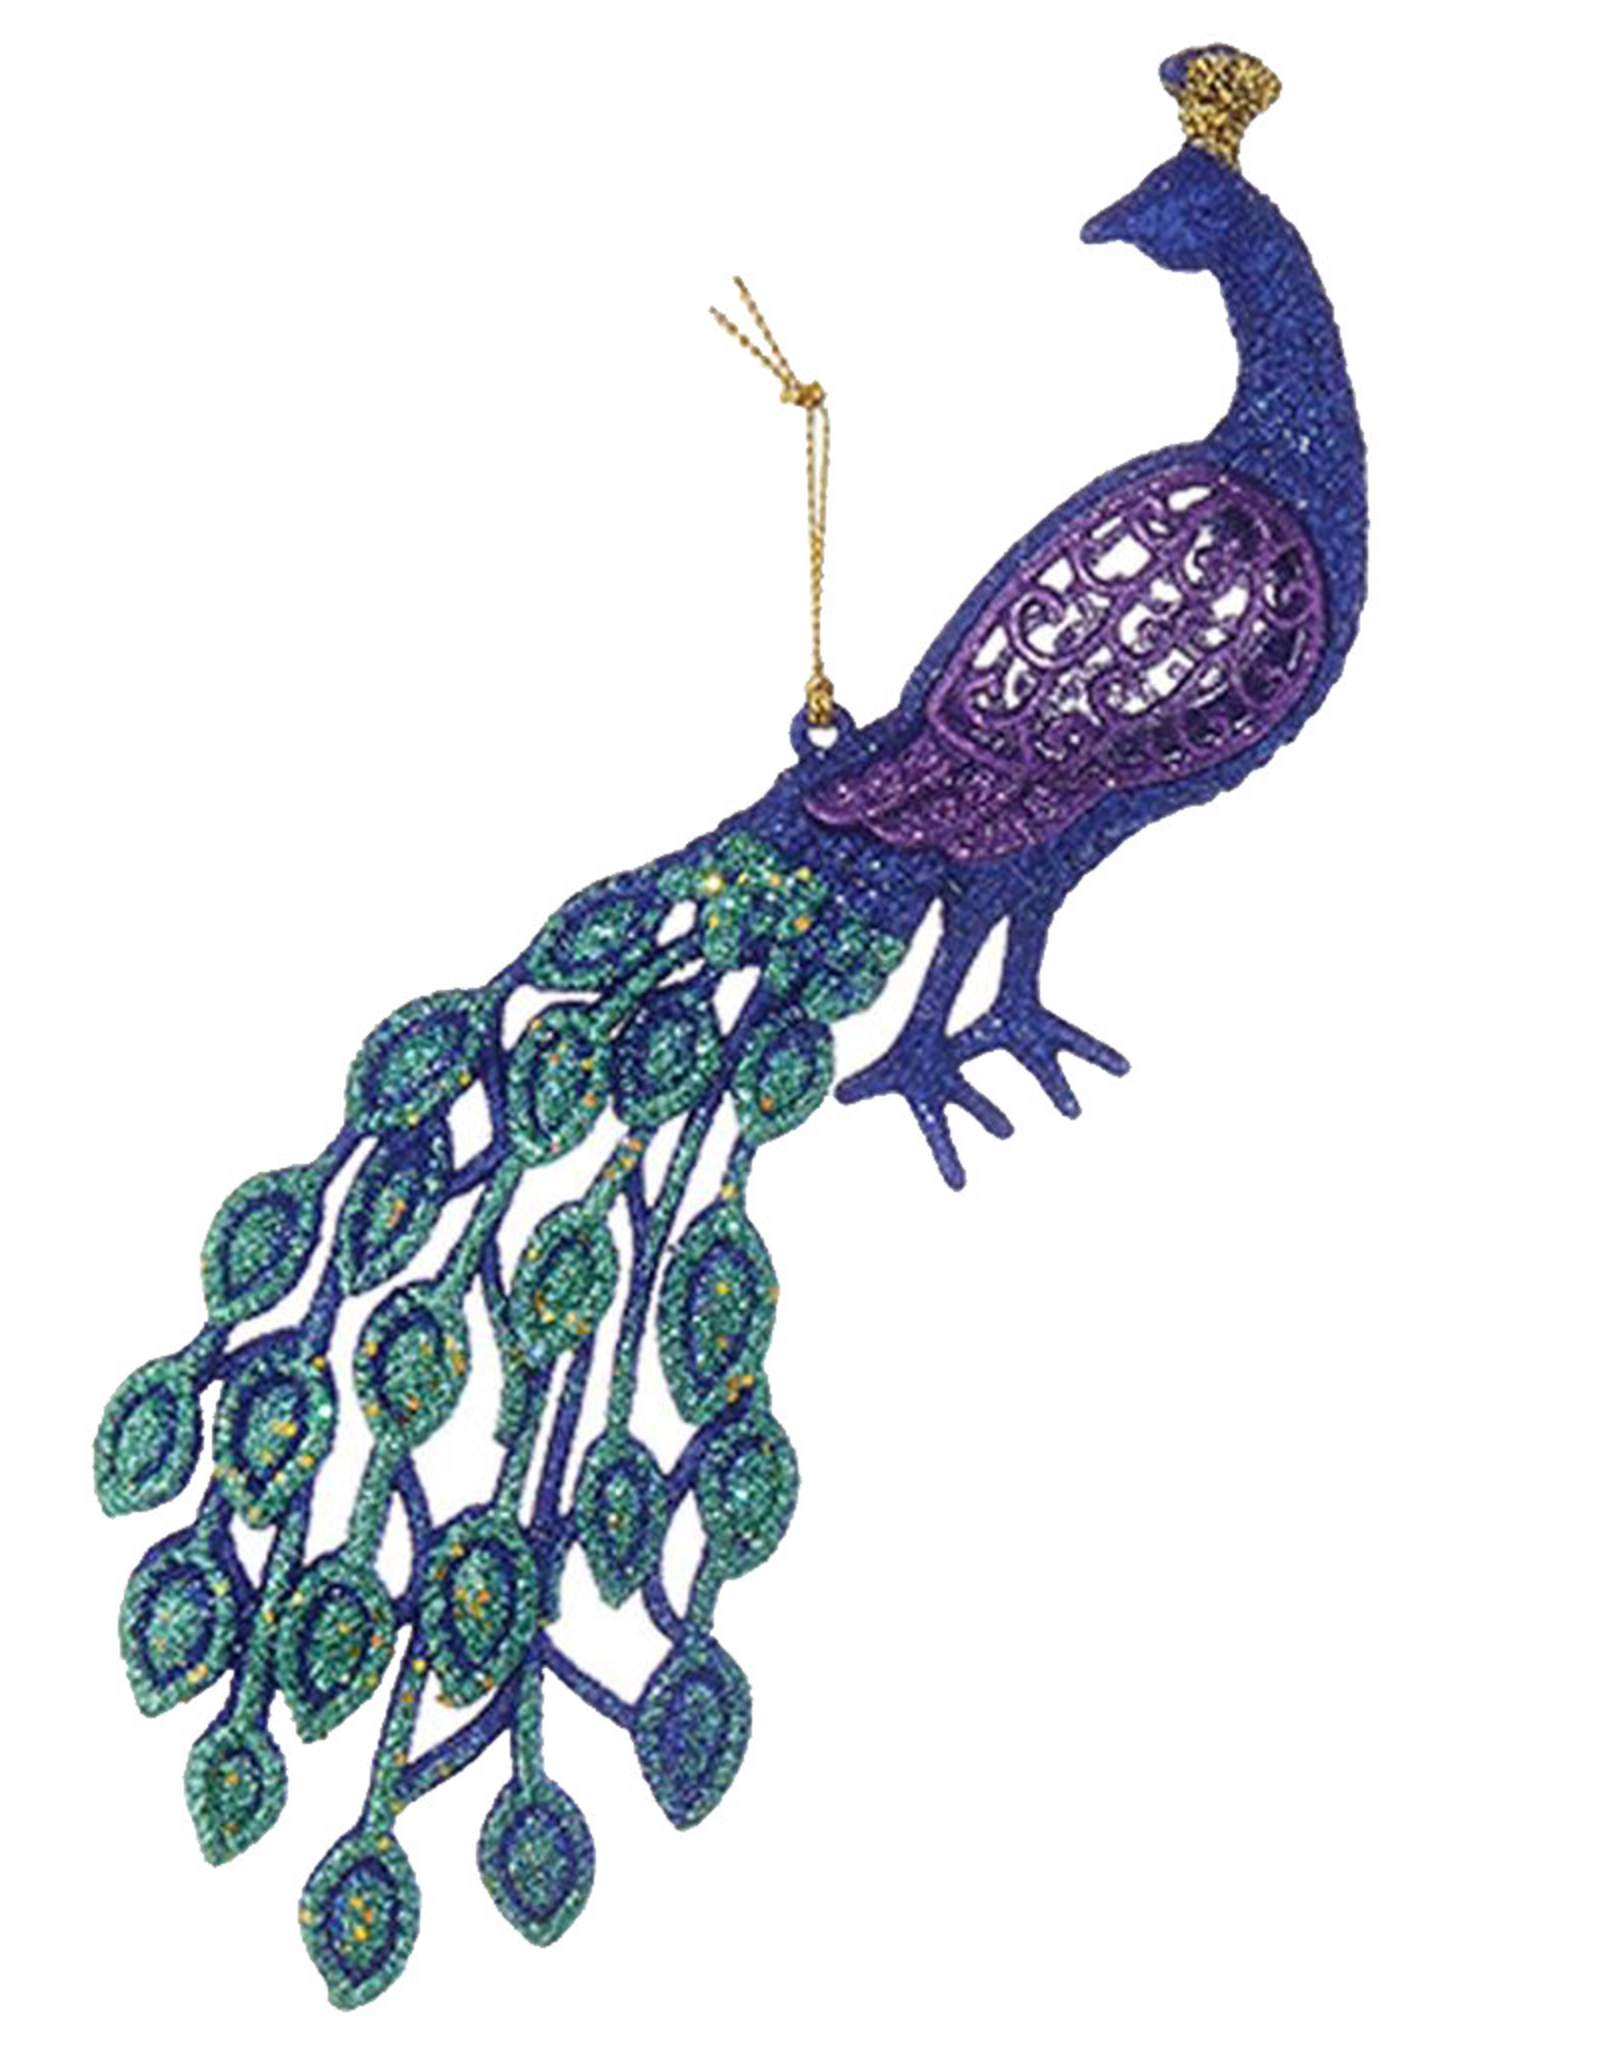 Kurt Adler Glittered Peacock Ornament 4.5 inch Blue Teal Purple